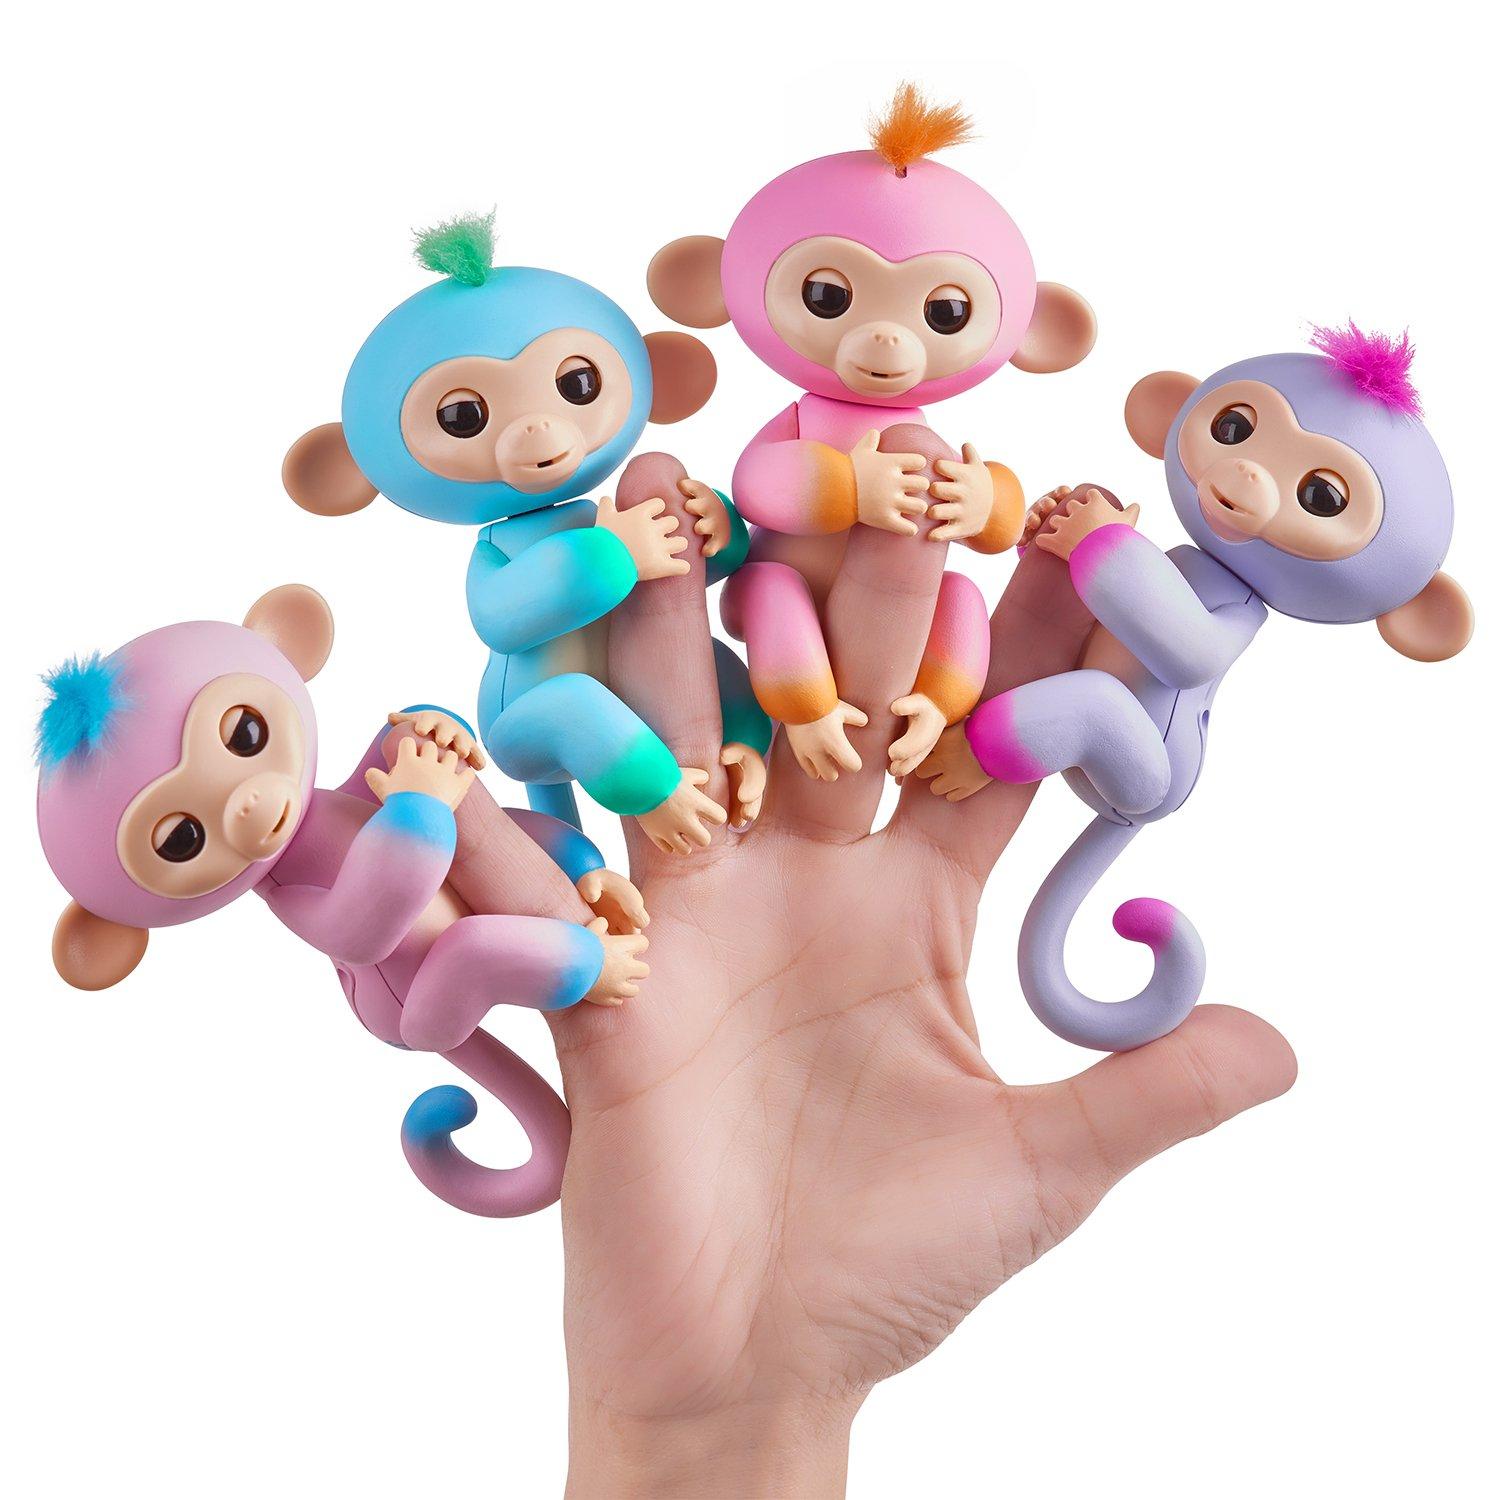 7. Fingerlings - Interactive Baby Monkey - Summer (Pink with Orange Hair) - wide 10